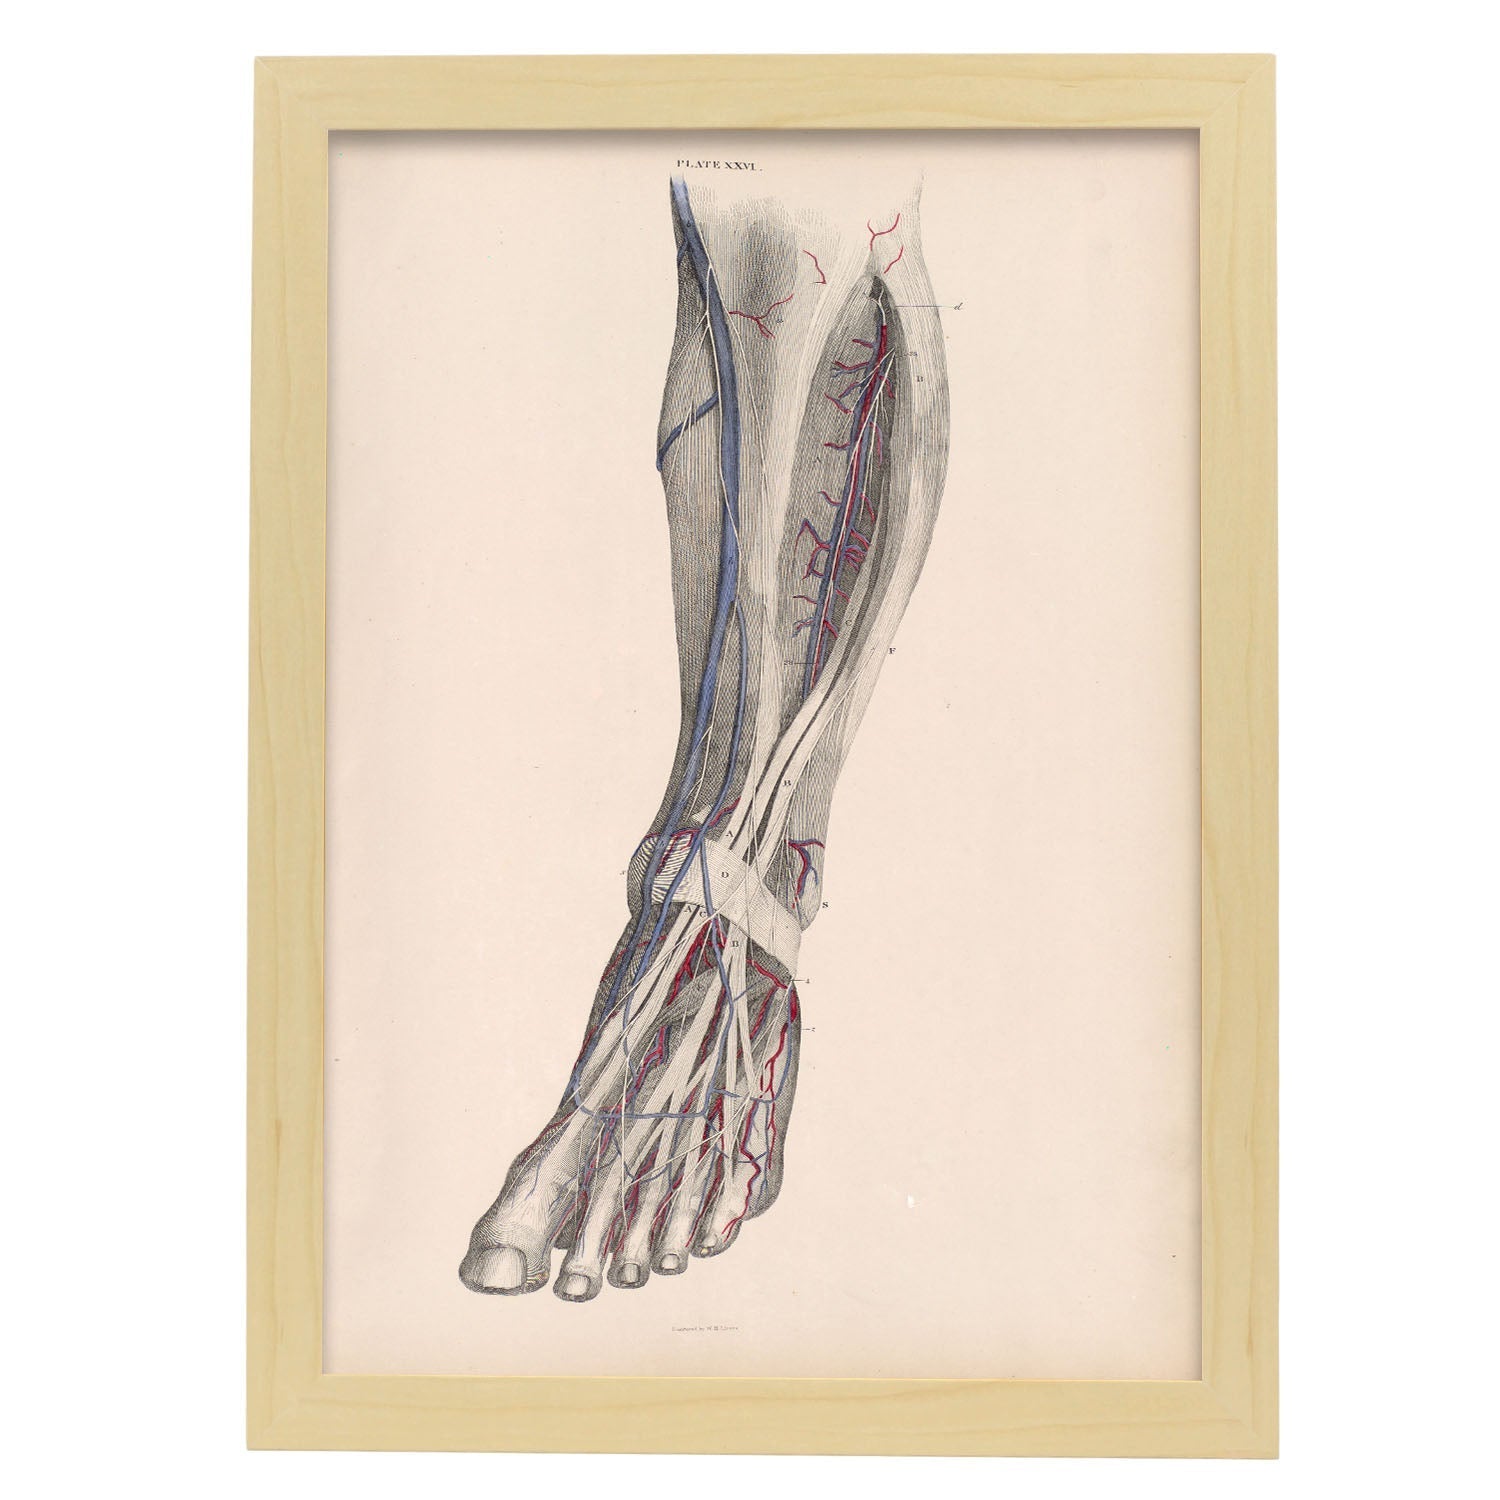 Dissection of the lower leg-Artwork-Nacnic-A3-Marco Madera clara-Nacnic Estudio SL